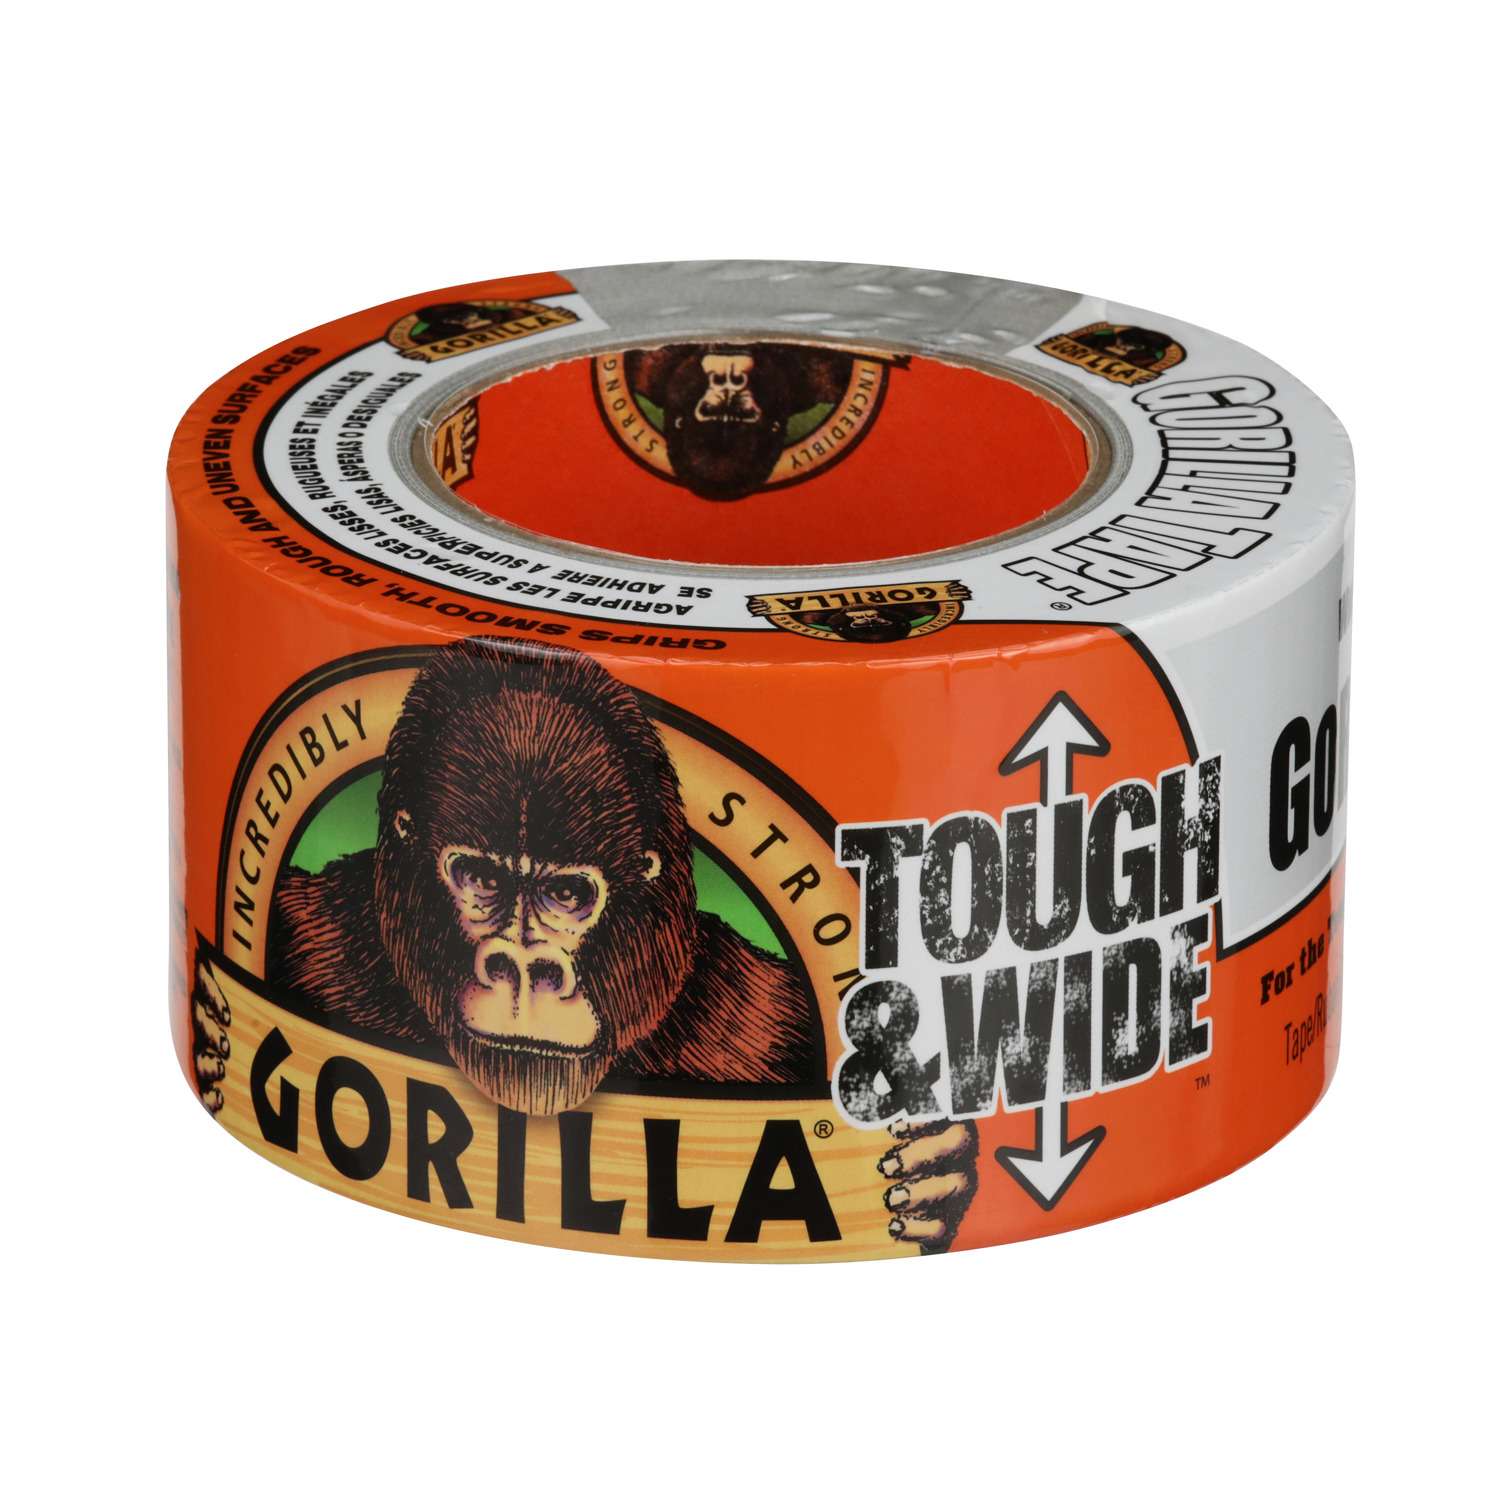  Gorilla Grip Original Mattress Slide Stopper and